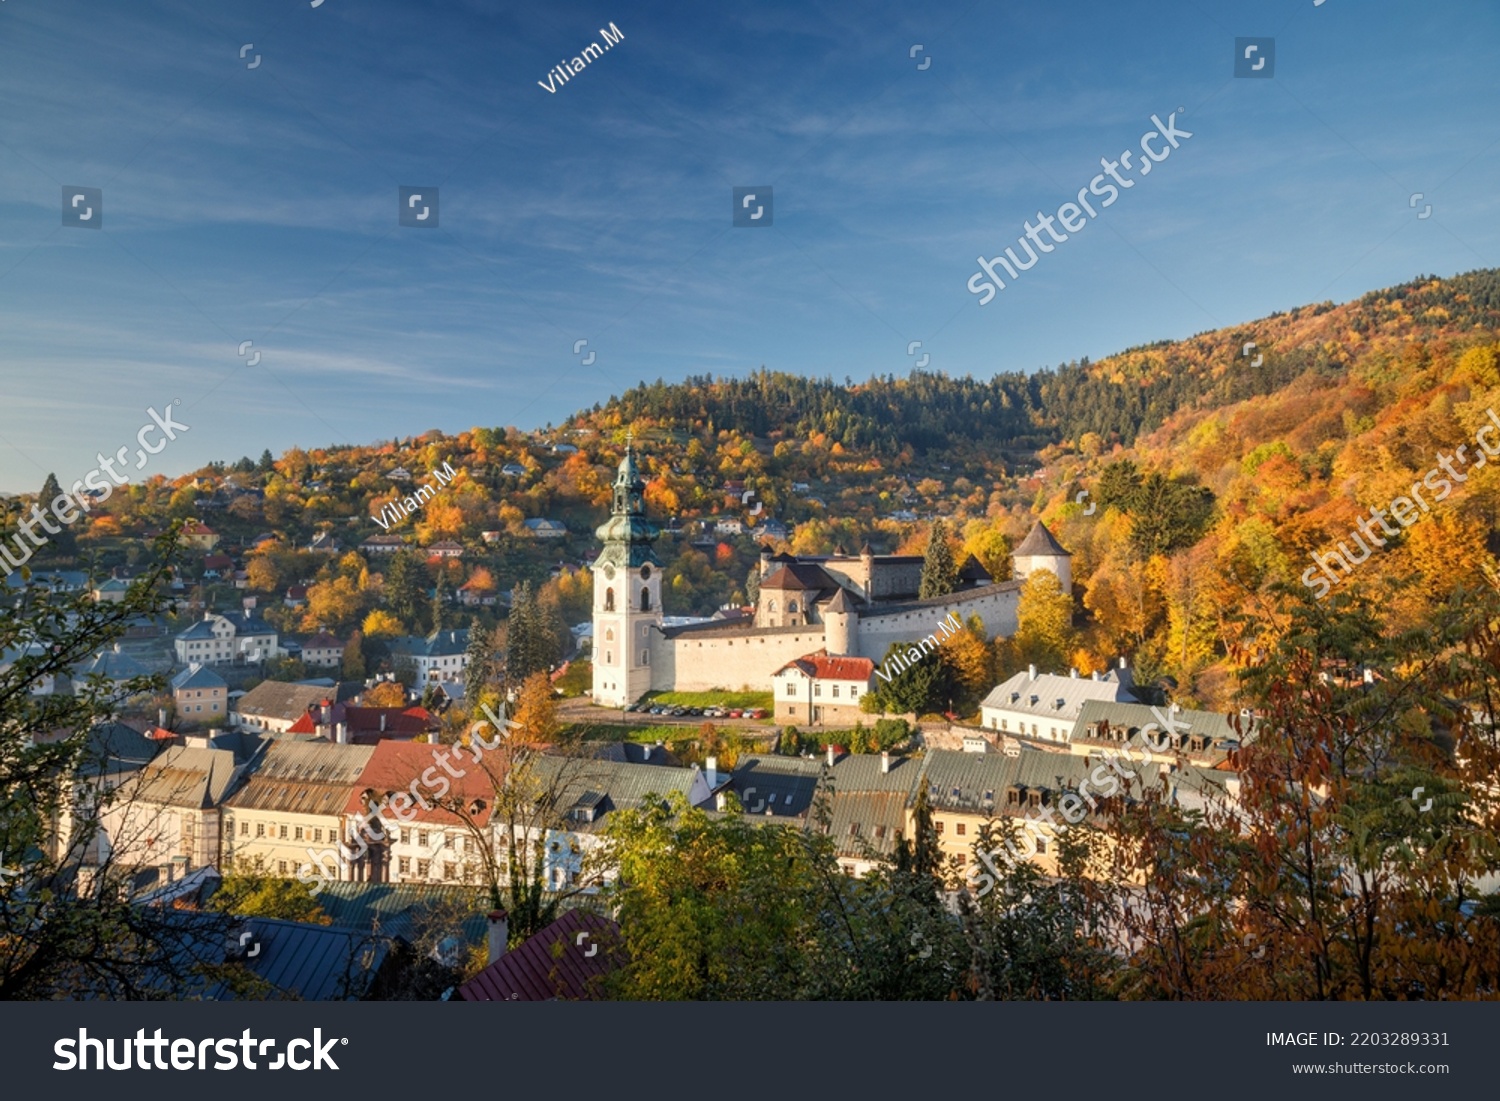 The Old Castle in Banska Stiavnica at an autumn season, Slovakia, Europe. #2203289331